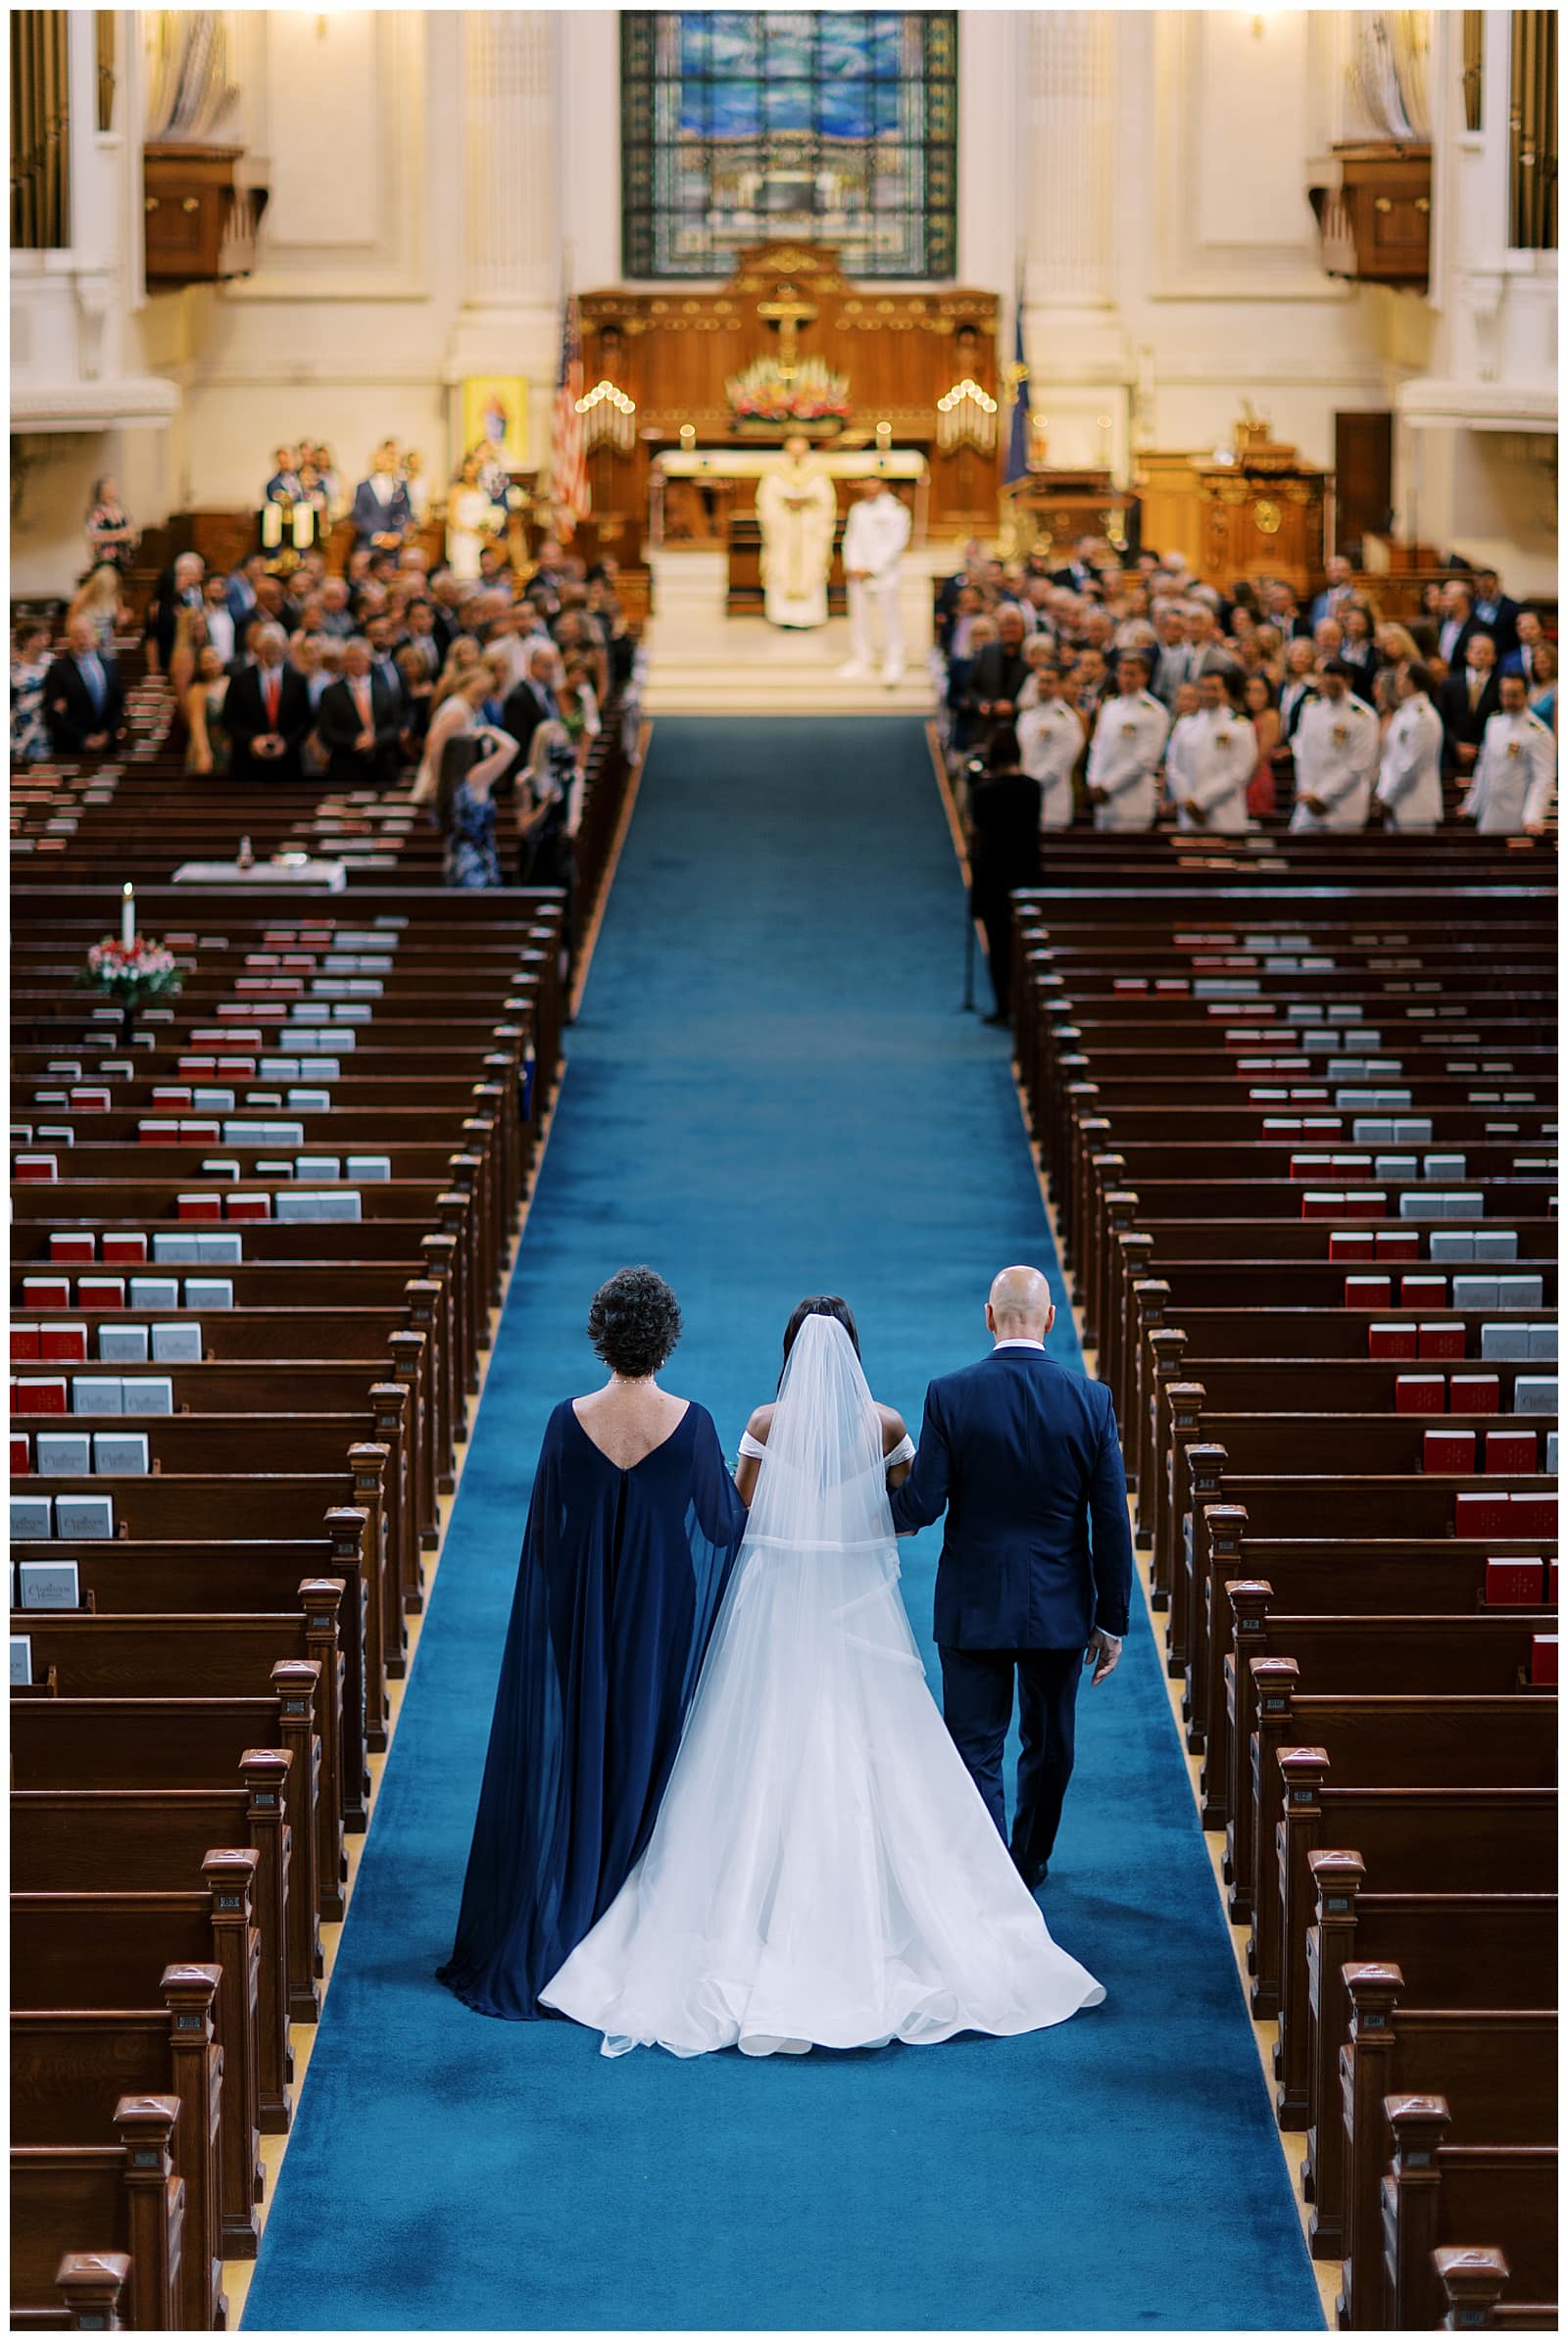 Danielle-Defayette-Photography-naval-academy-chapel-wedding-MD_0016.jpg